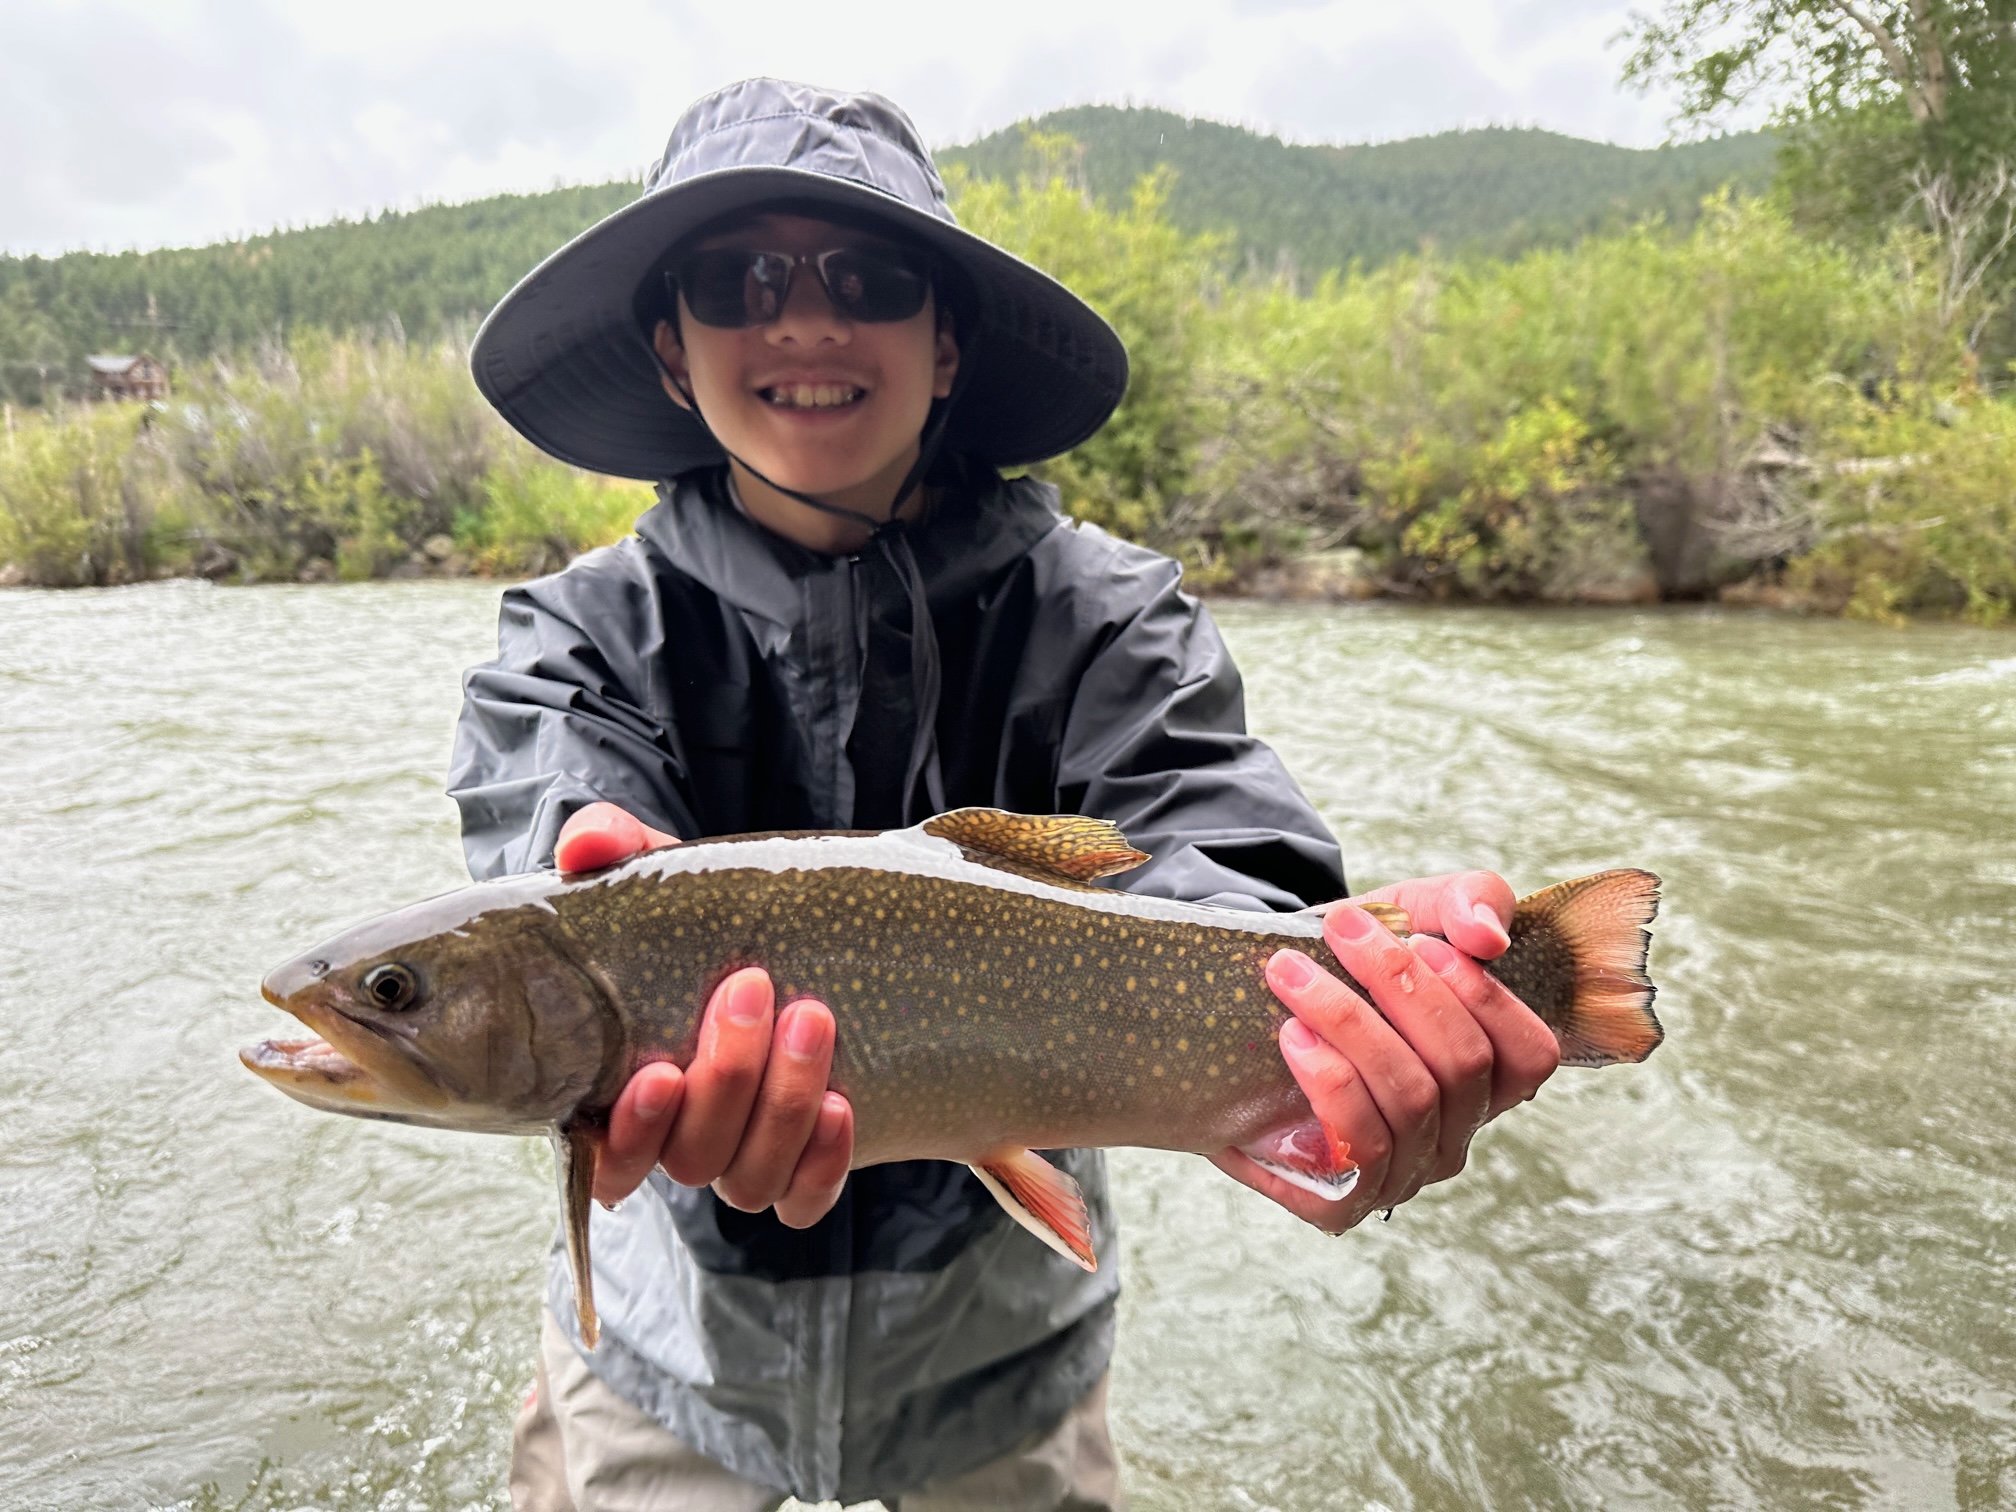 A rare brook trout landed near Denver